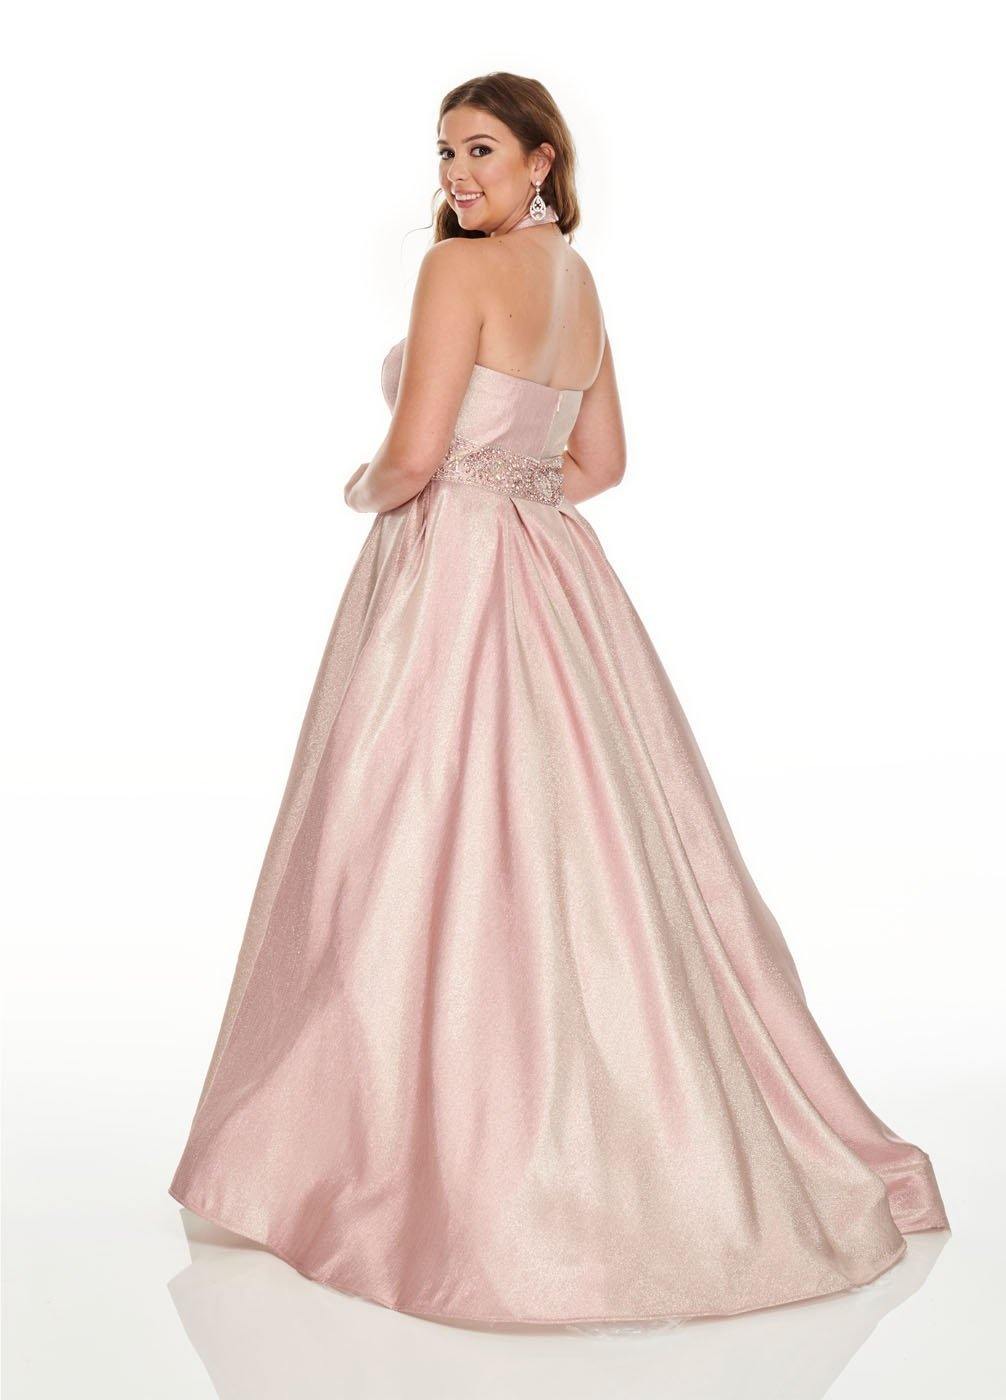 Rachel Allan Long Plus Size Prom Dress - The Dress Outlet